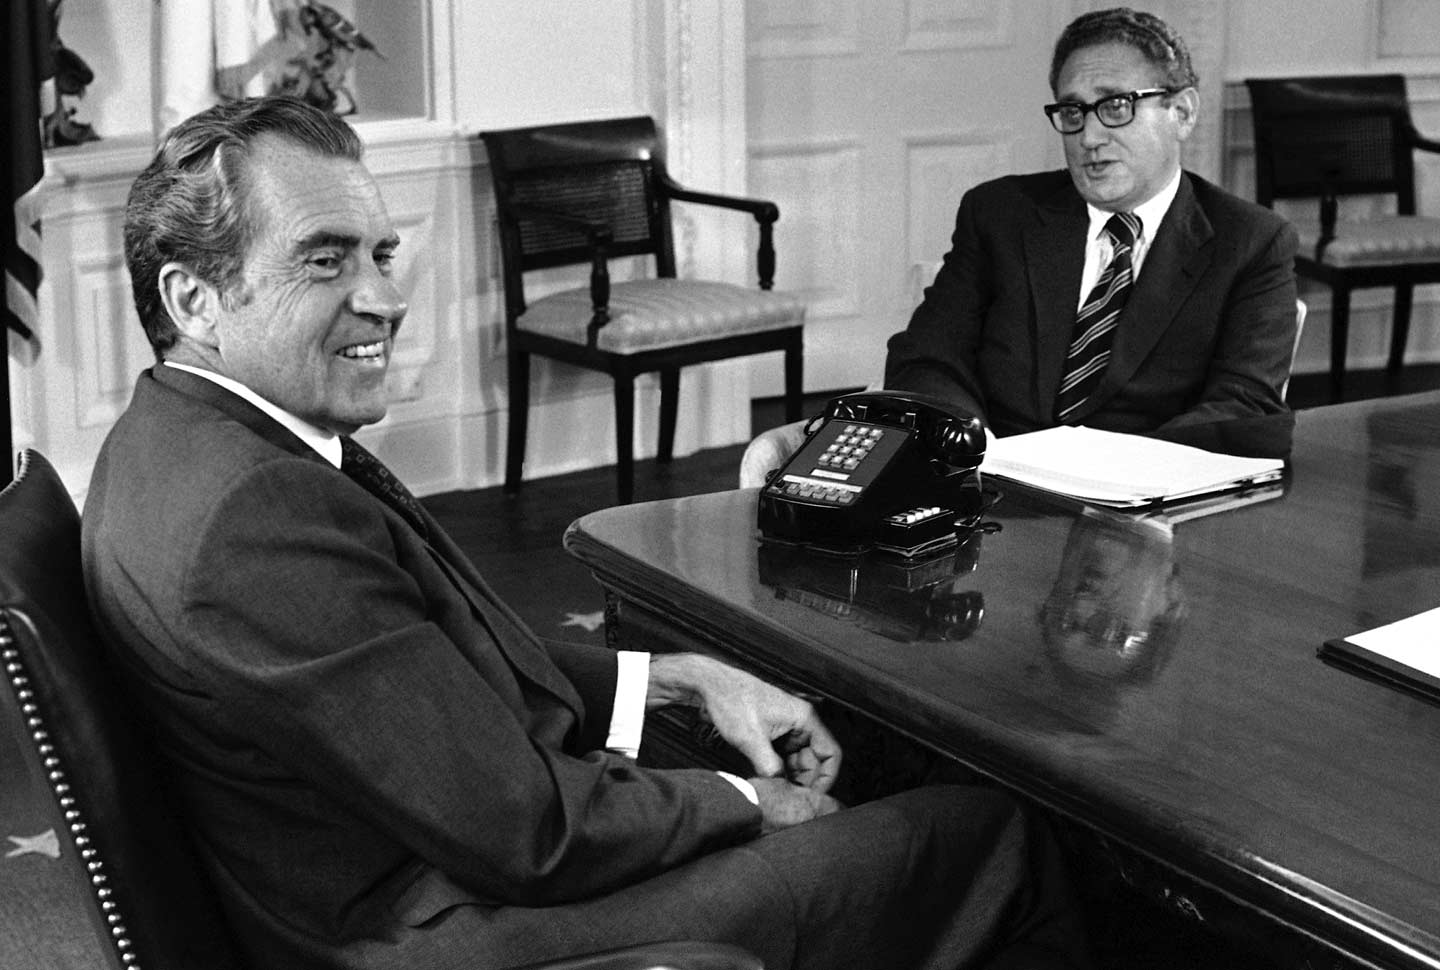 Nixon with Kissinger